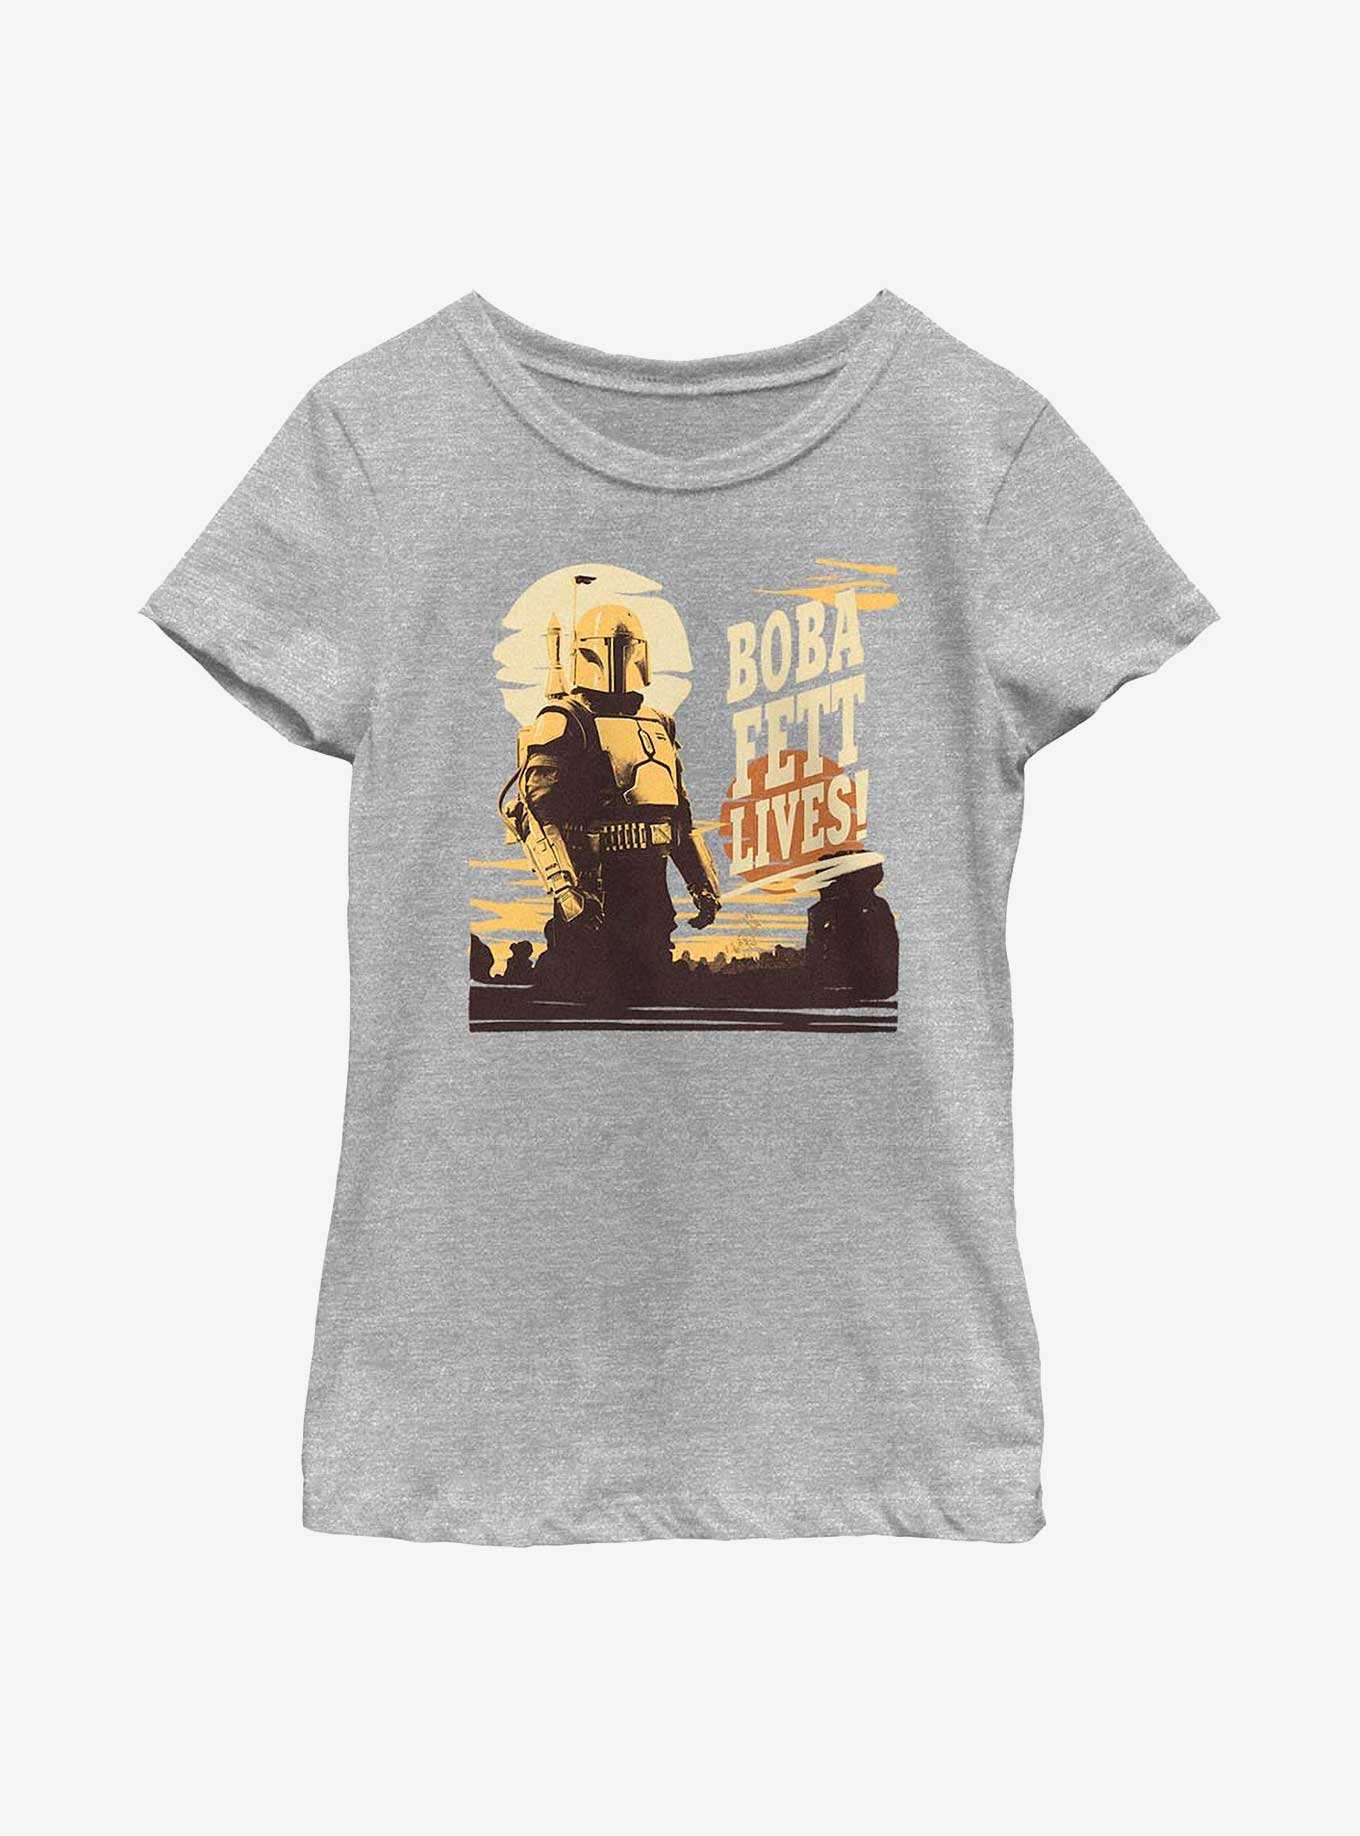 Star Wars: The Book Of Boba Fett Boba Fett Lives! Youth Girls T-Shirt, , hi-res